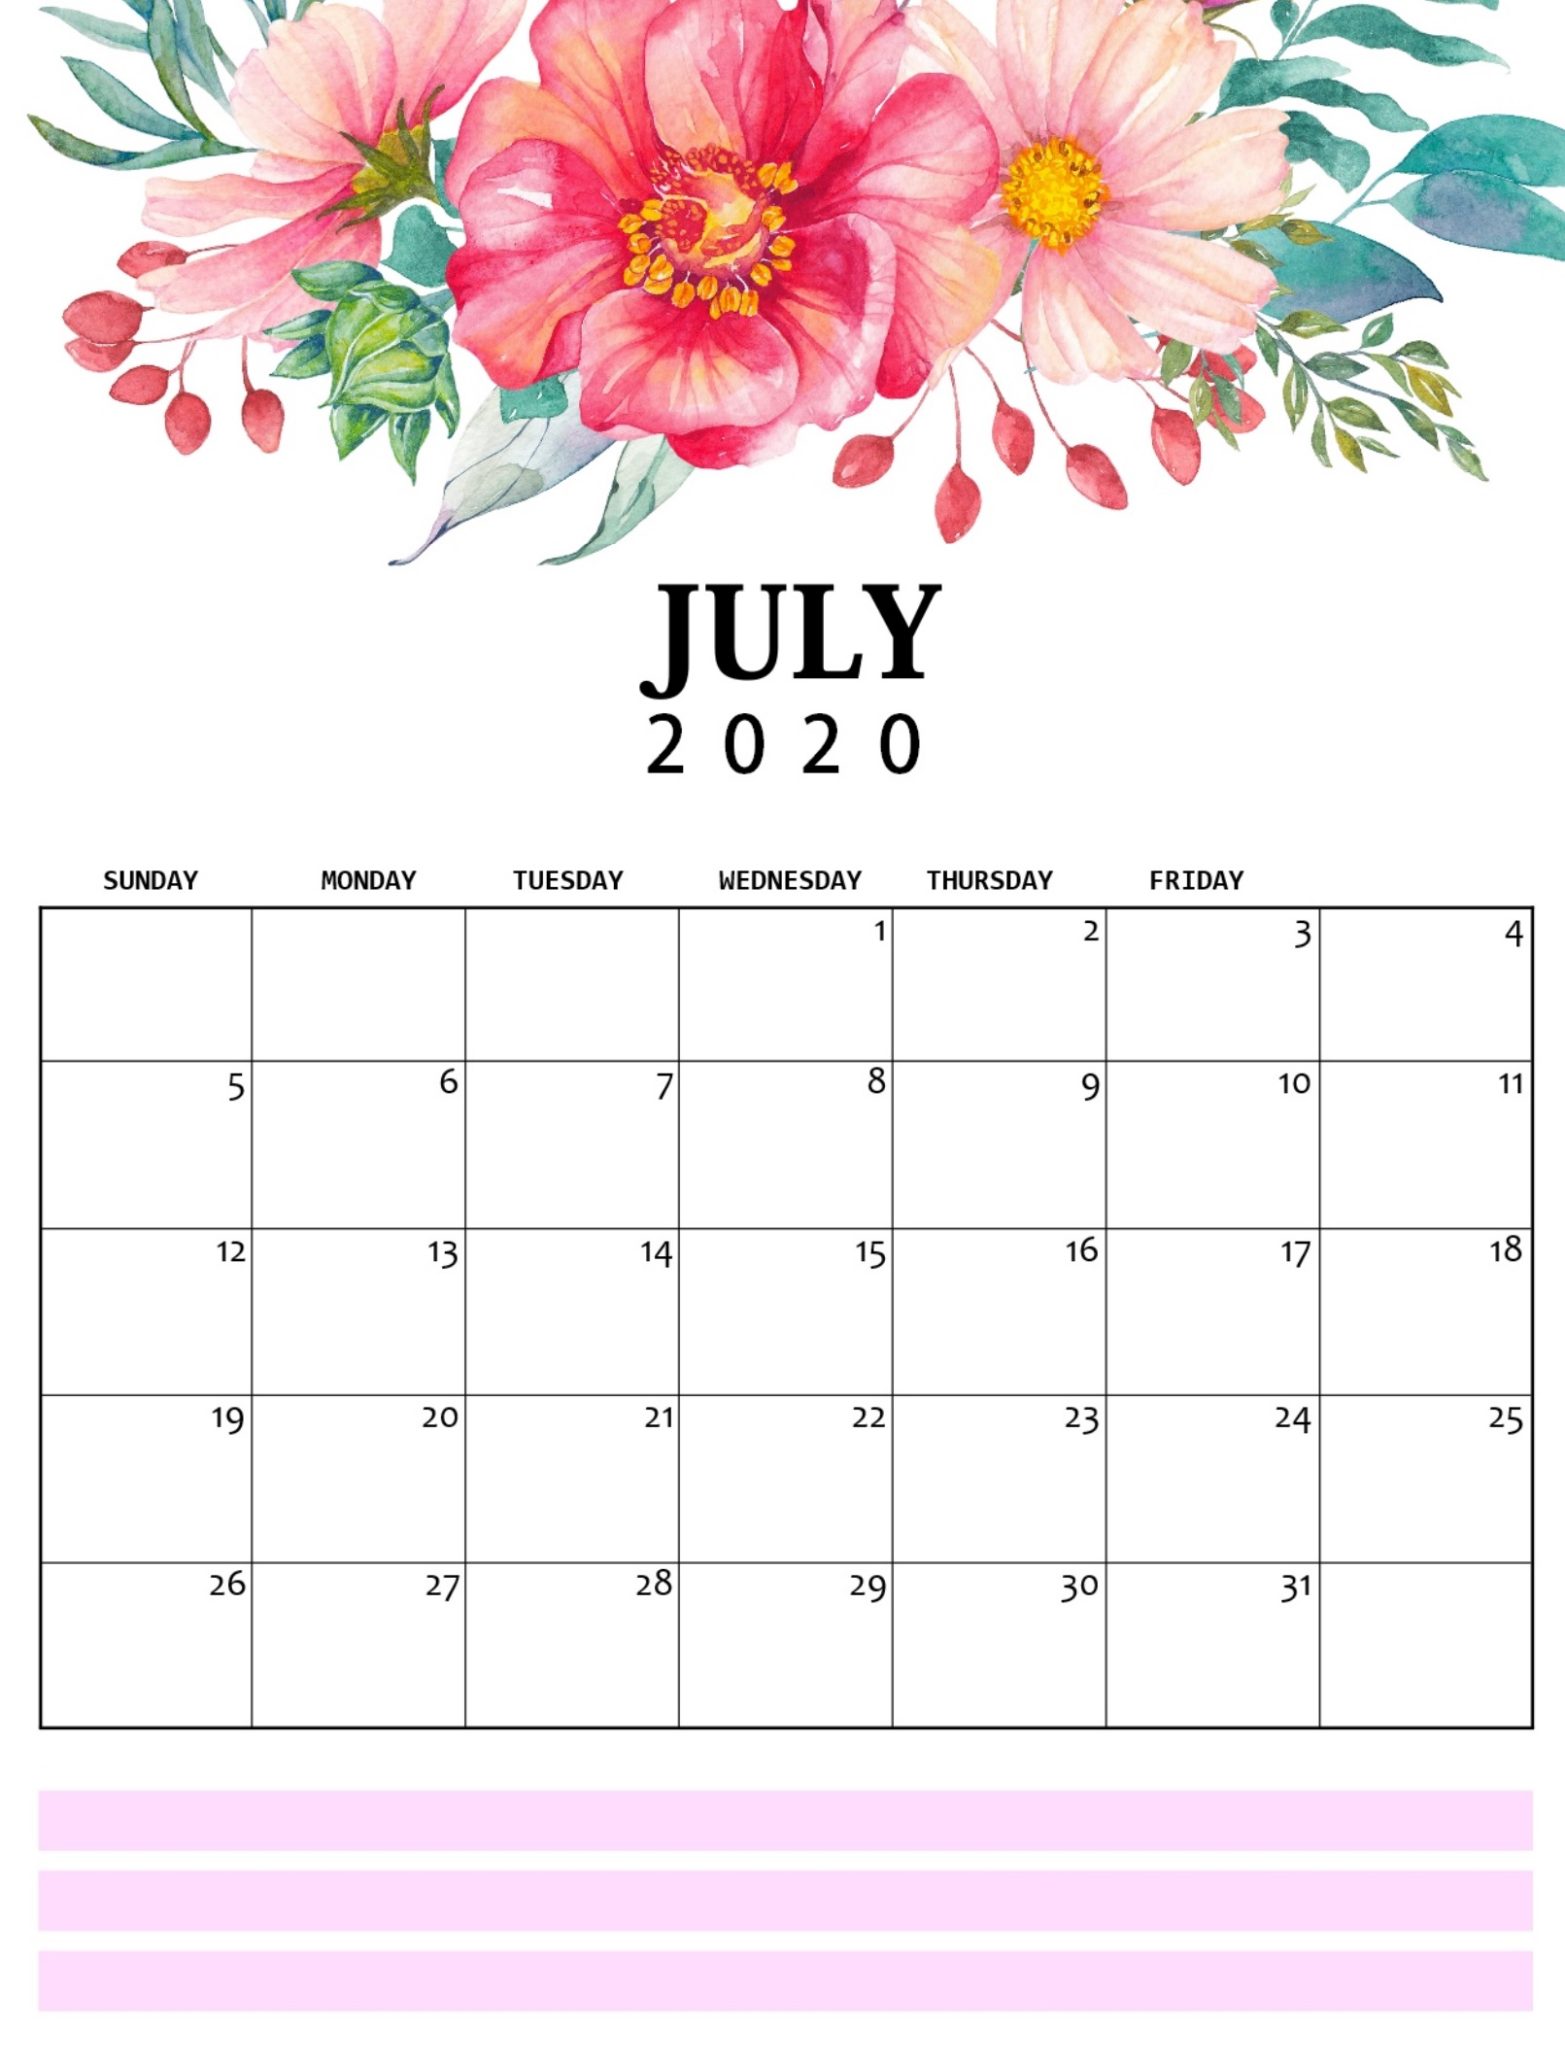 Best July 2020 Floral Calendar